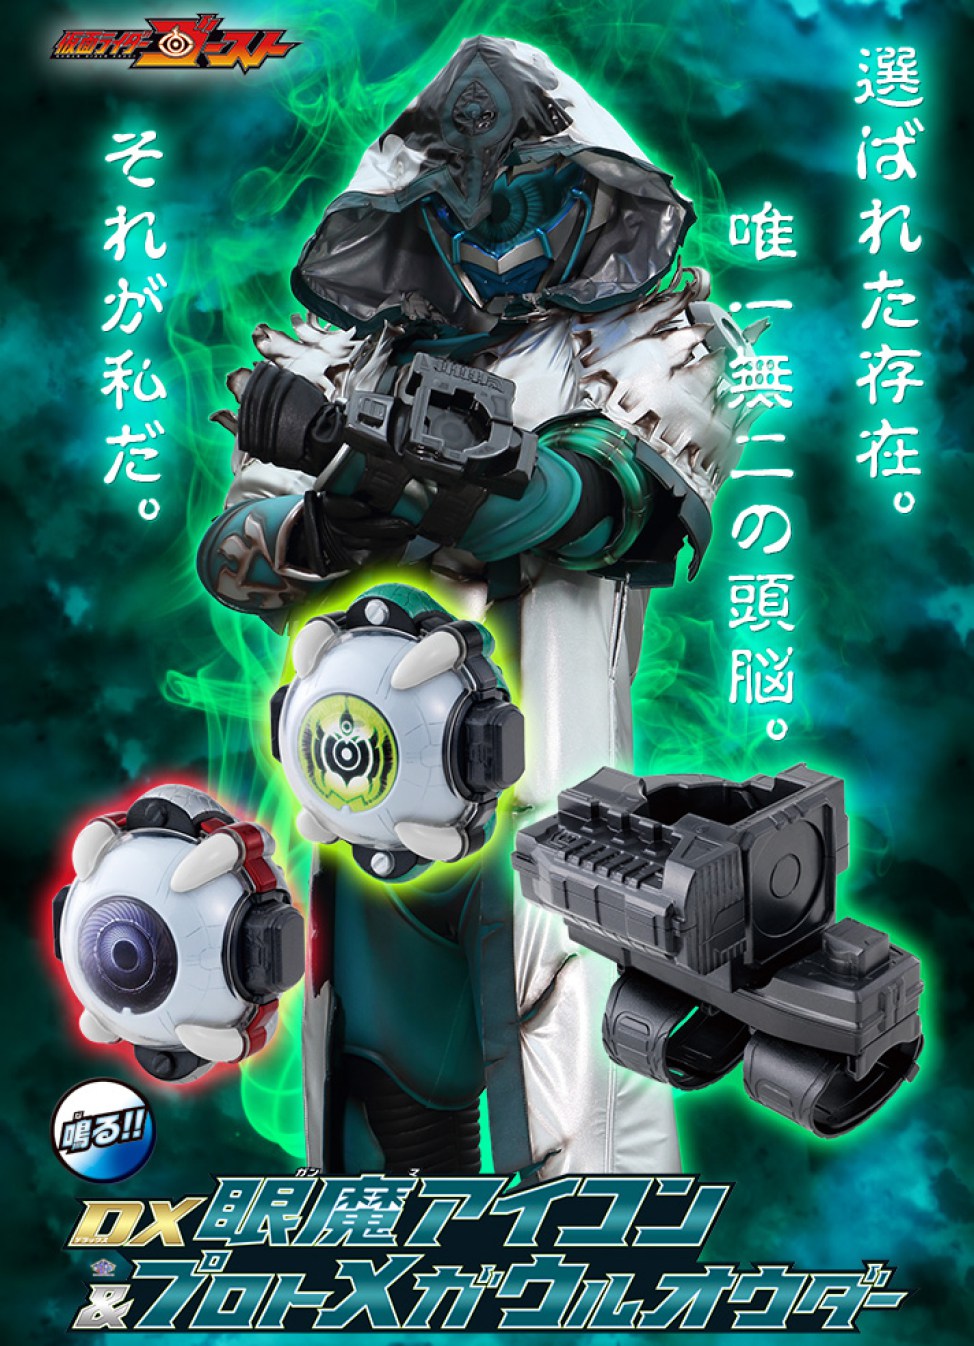 New Masked Kamen Rider Ghost DX ORE GHOST EYECON BANDAI Premium Price Japan